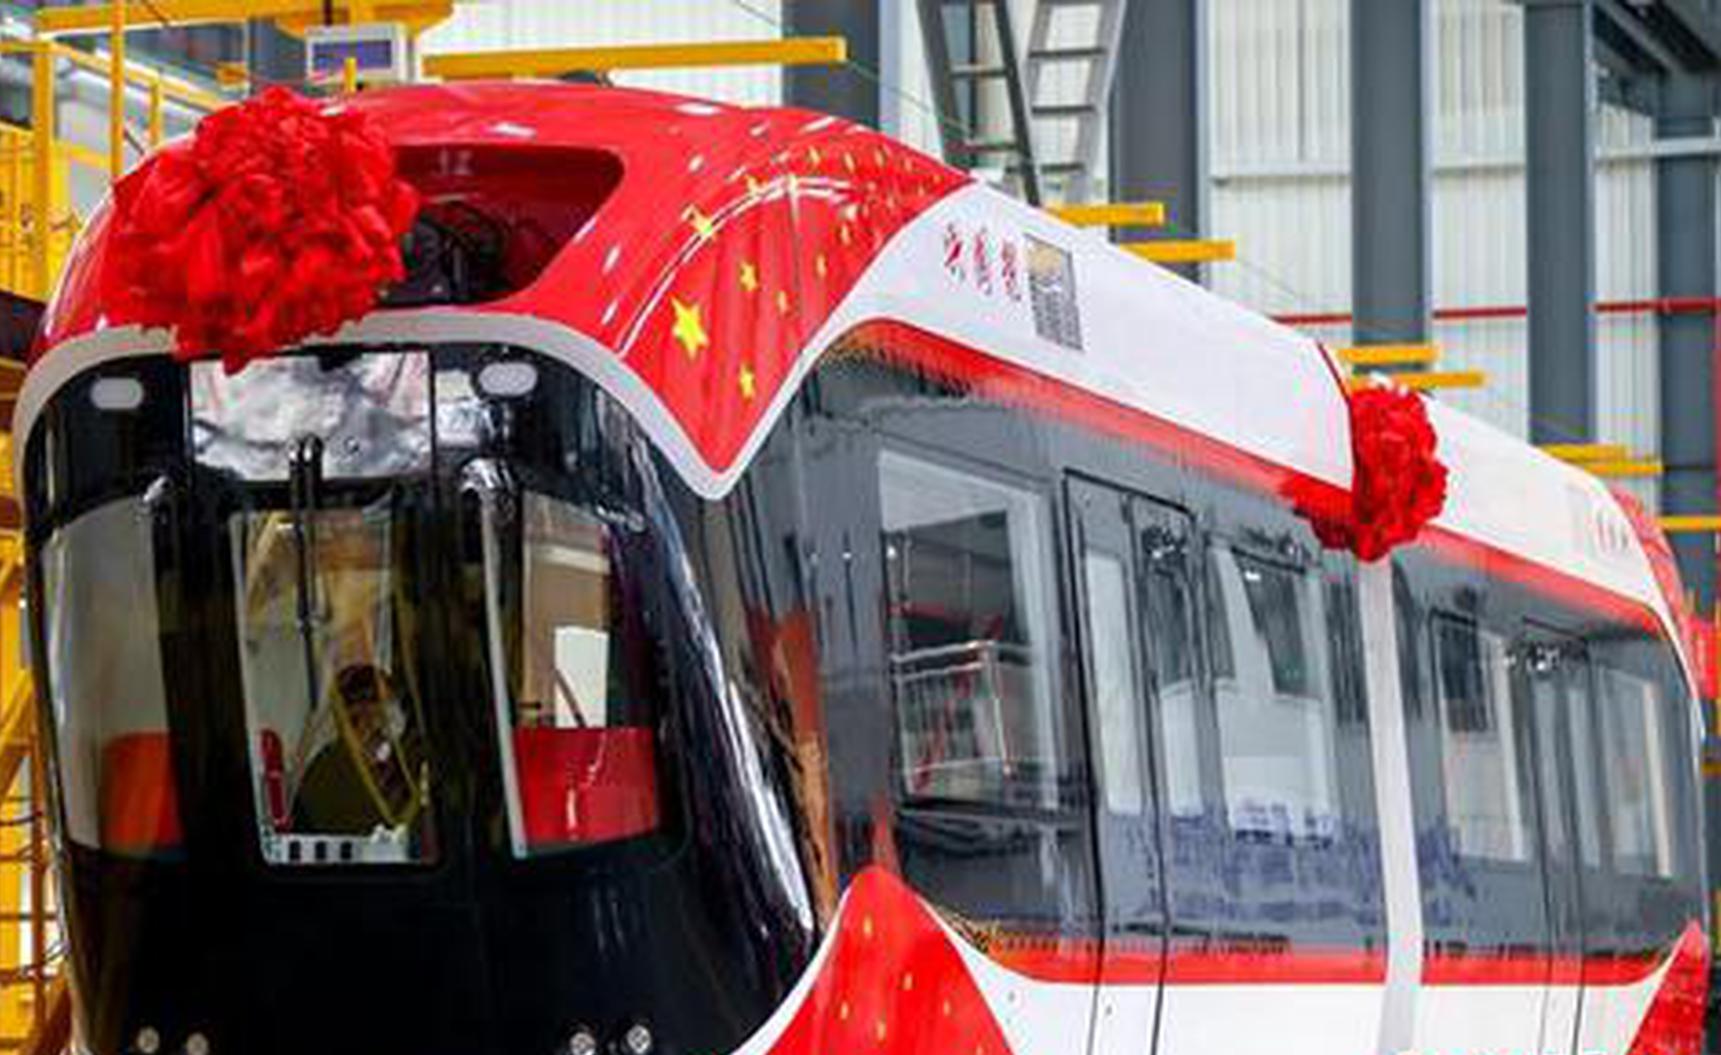 'Sky train' rolls off assembly line in Wuhan